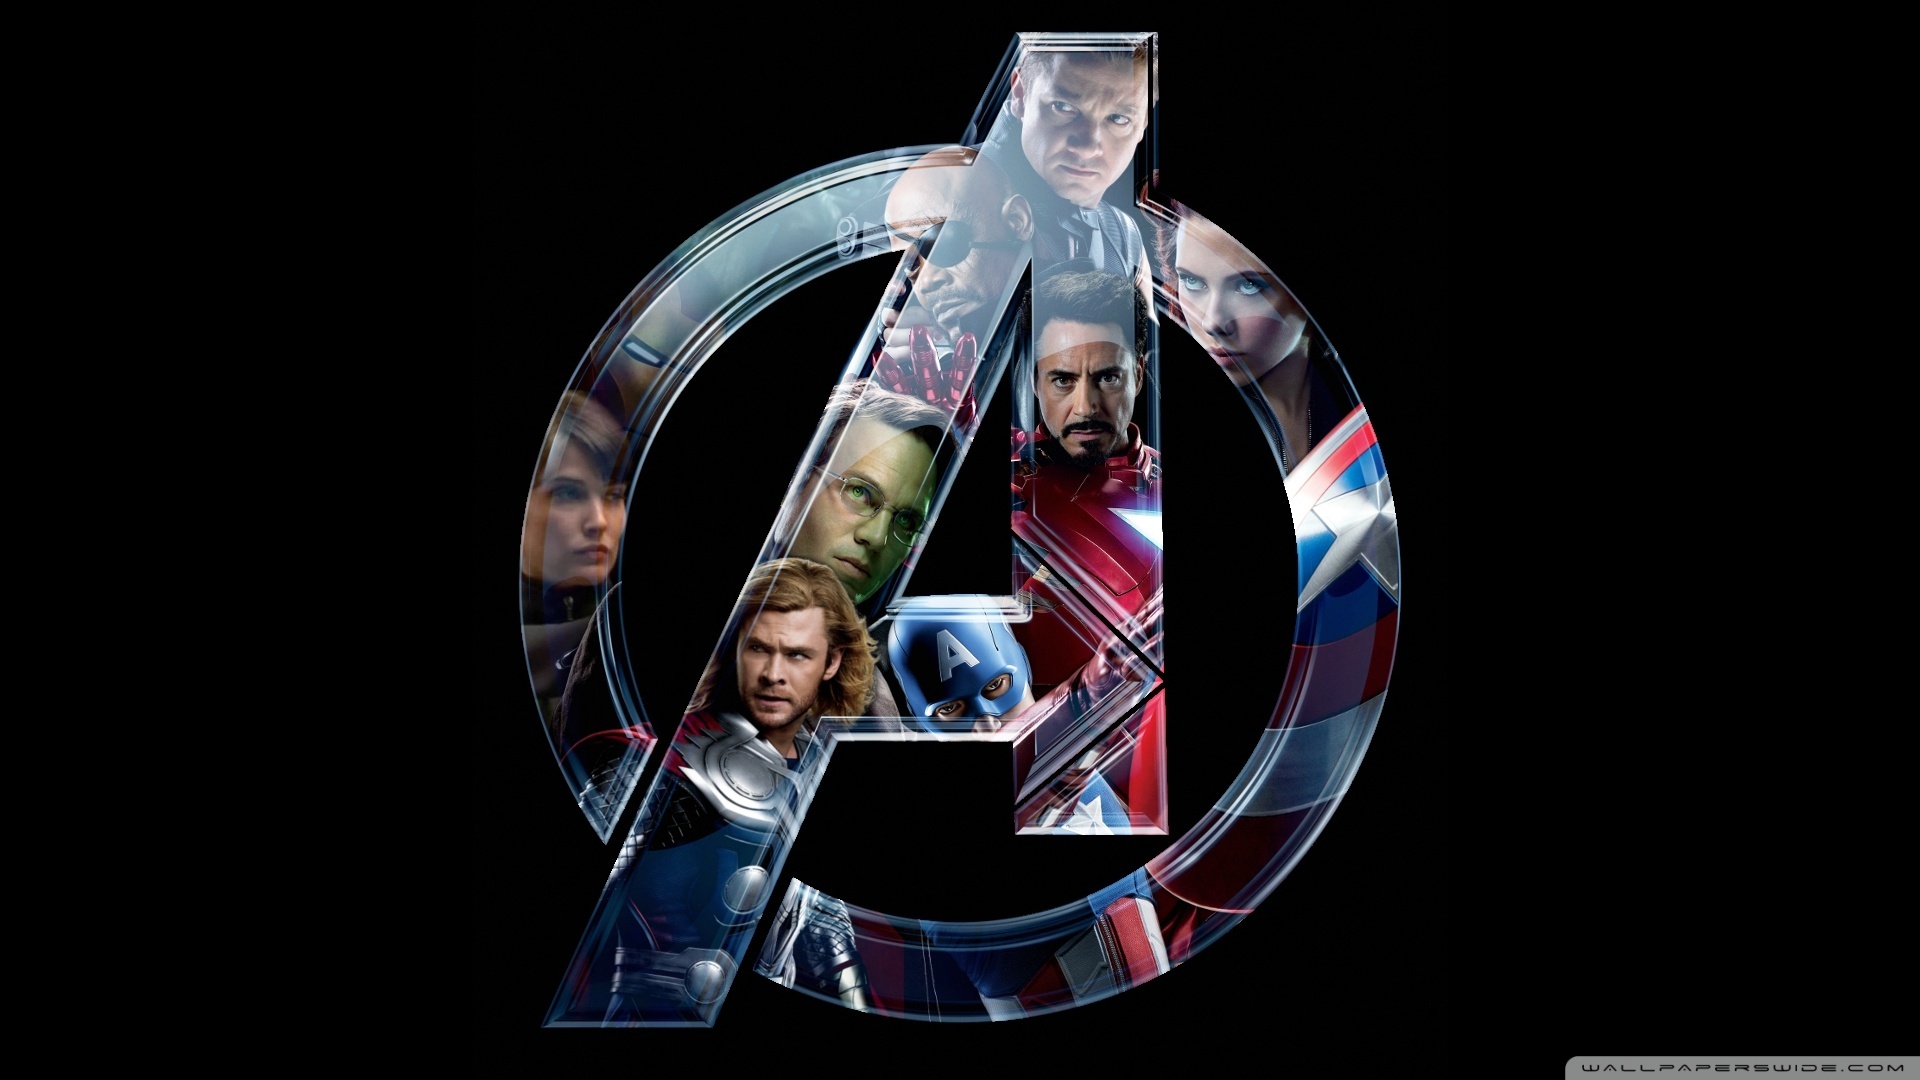 49+] Marvel Avengers Wallpaper HD - WallpaperSafari